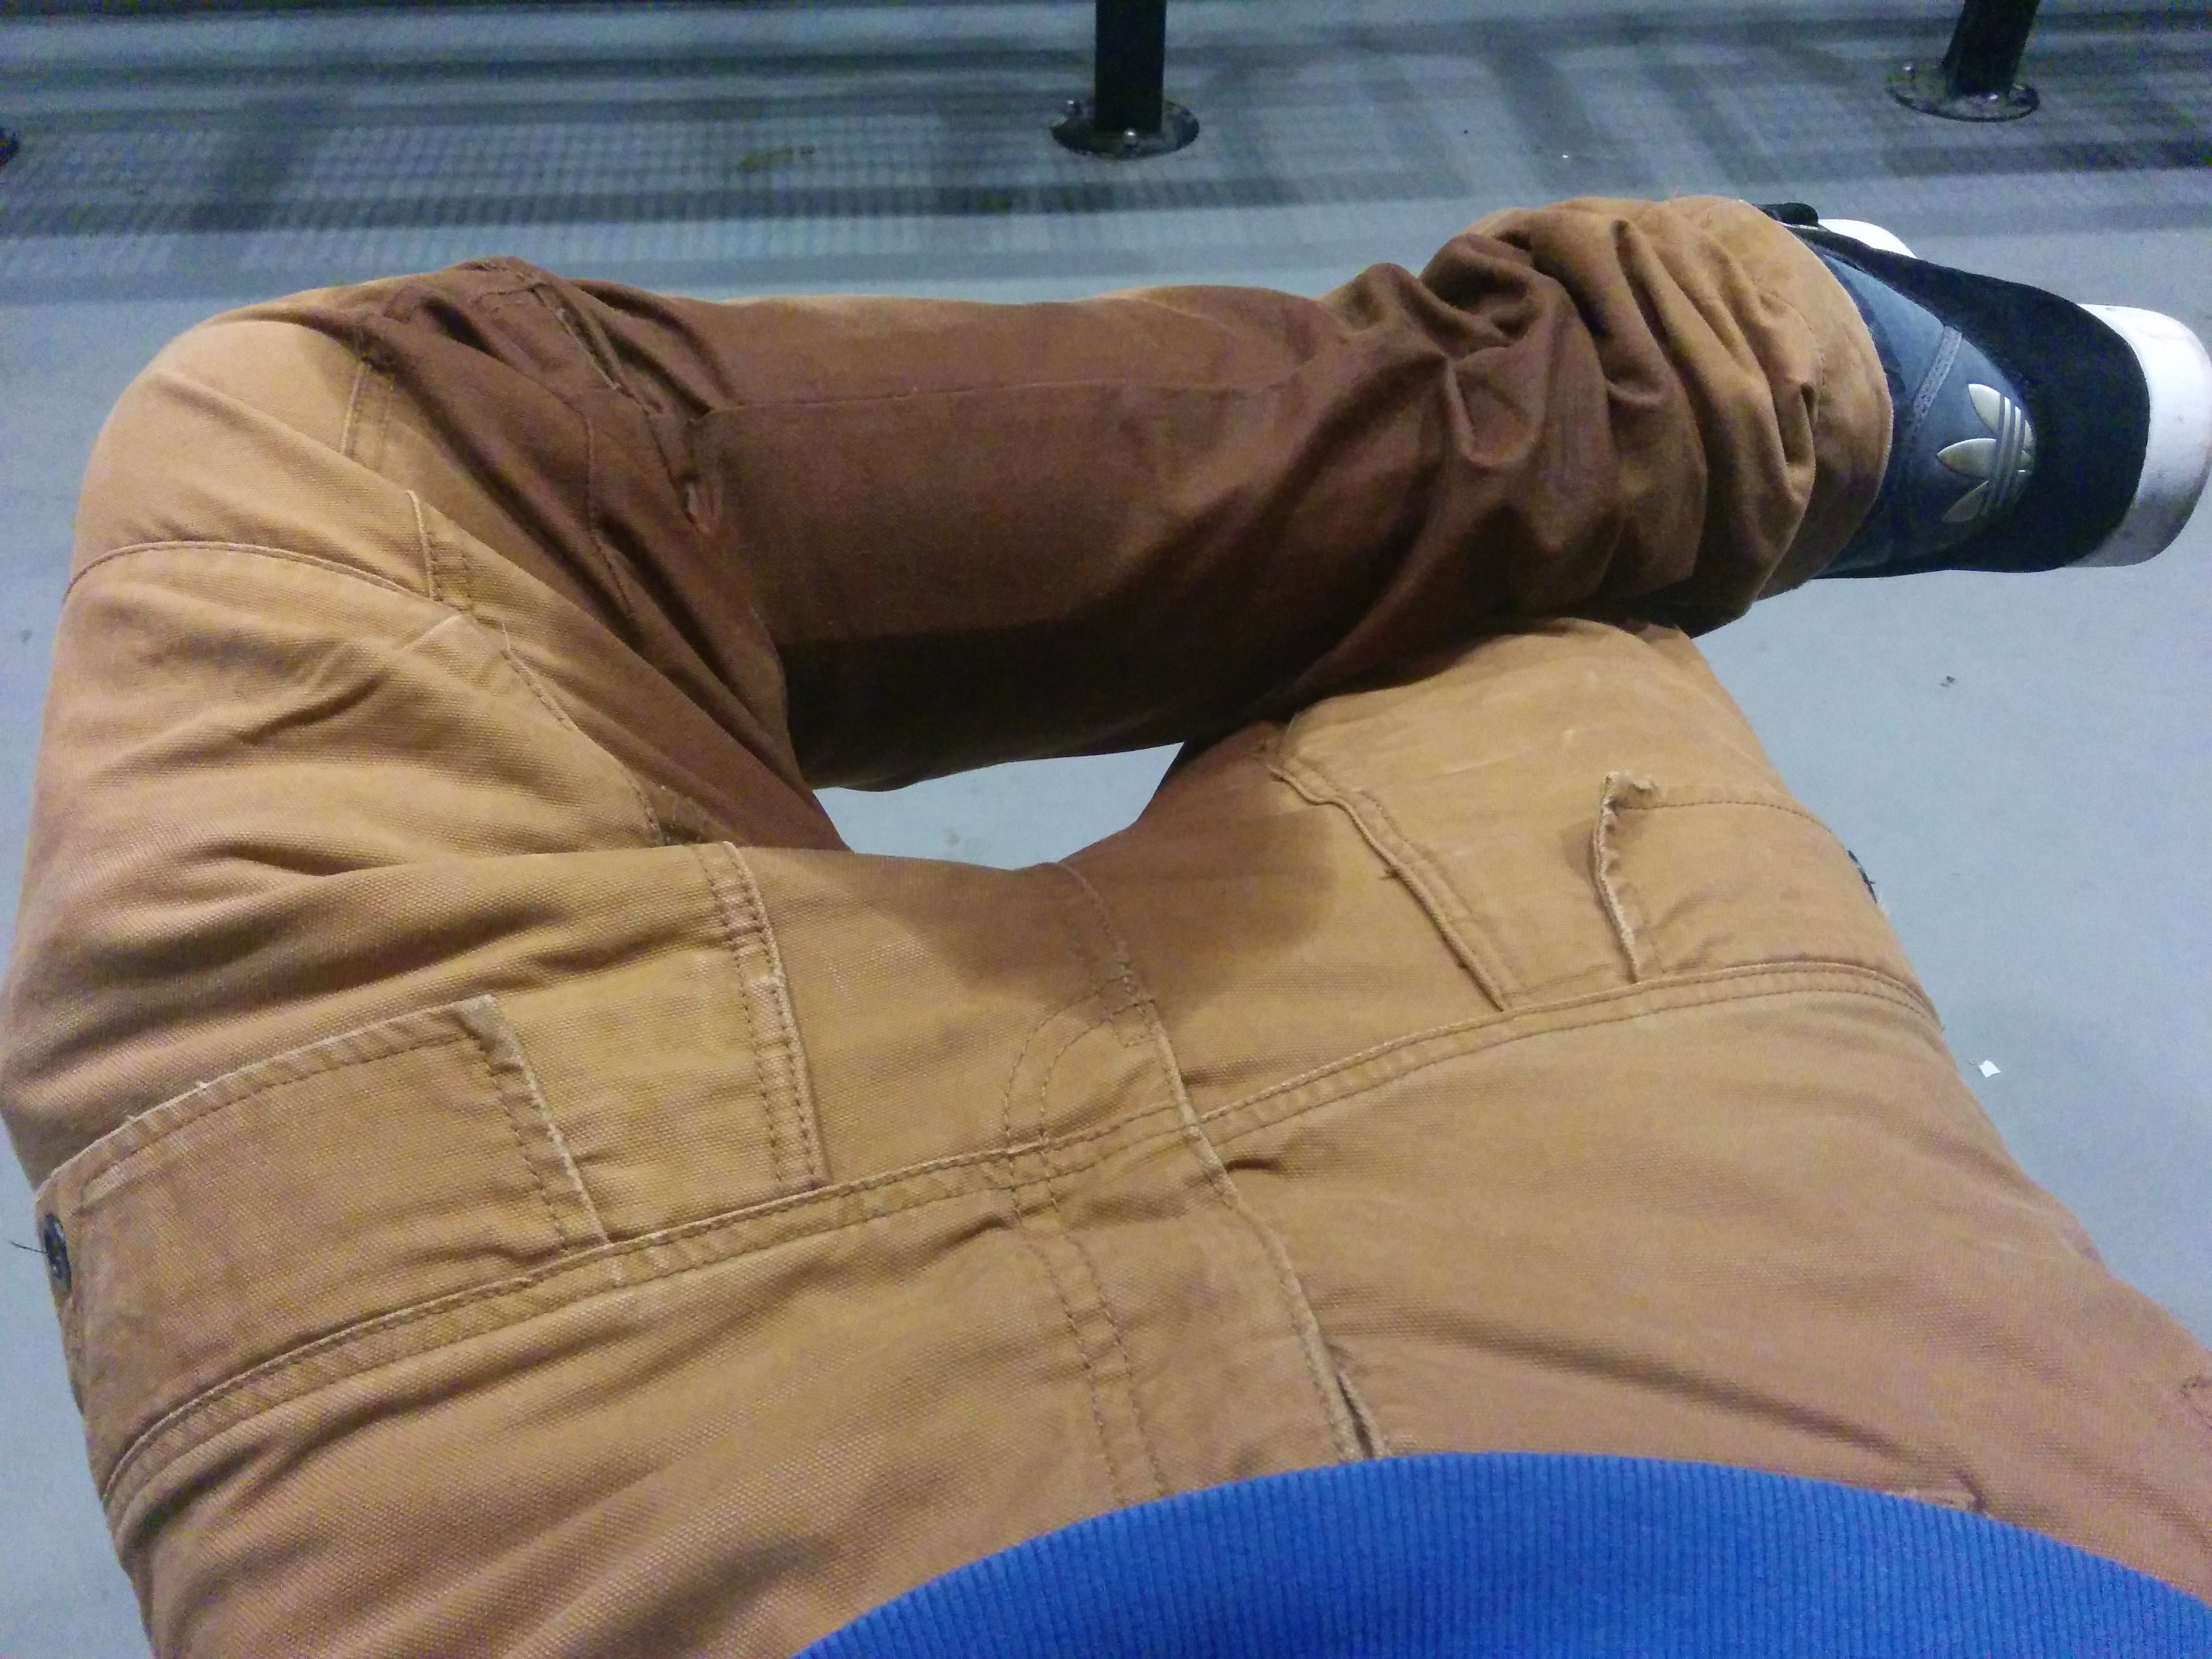 Pissing jeans on train platform